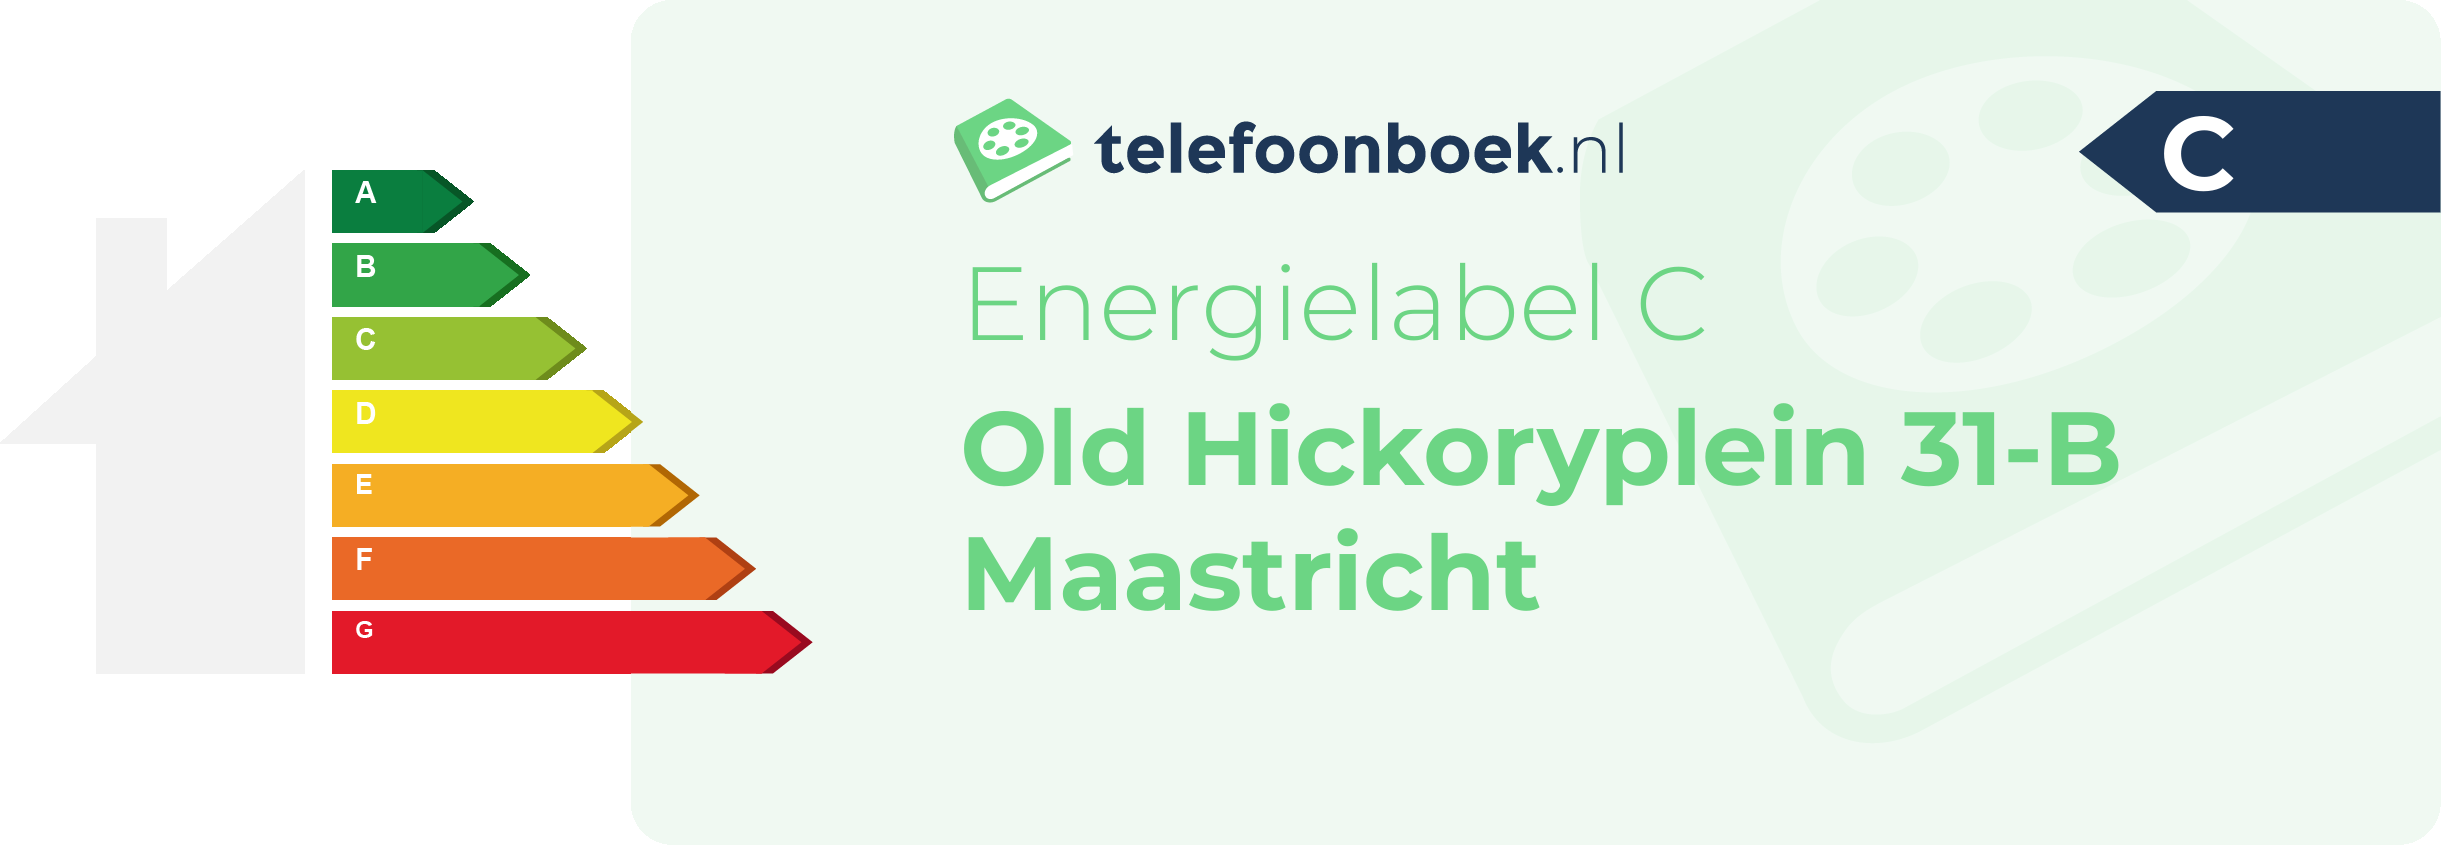 Energielabel Old Hickoryplein 31-B Maastricht